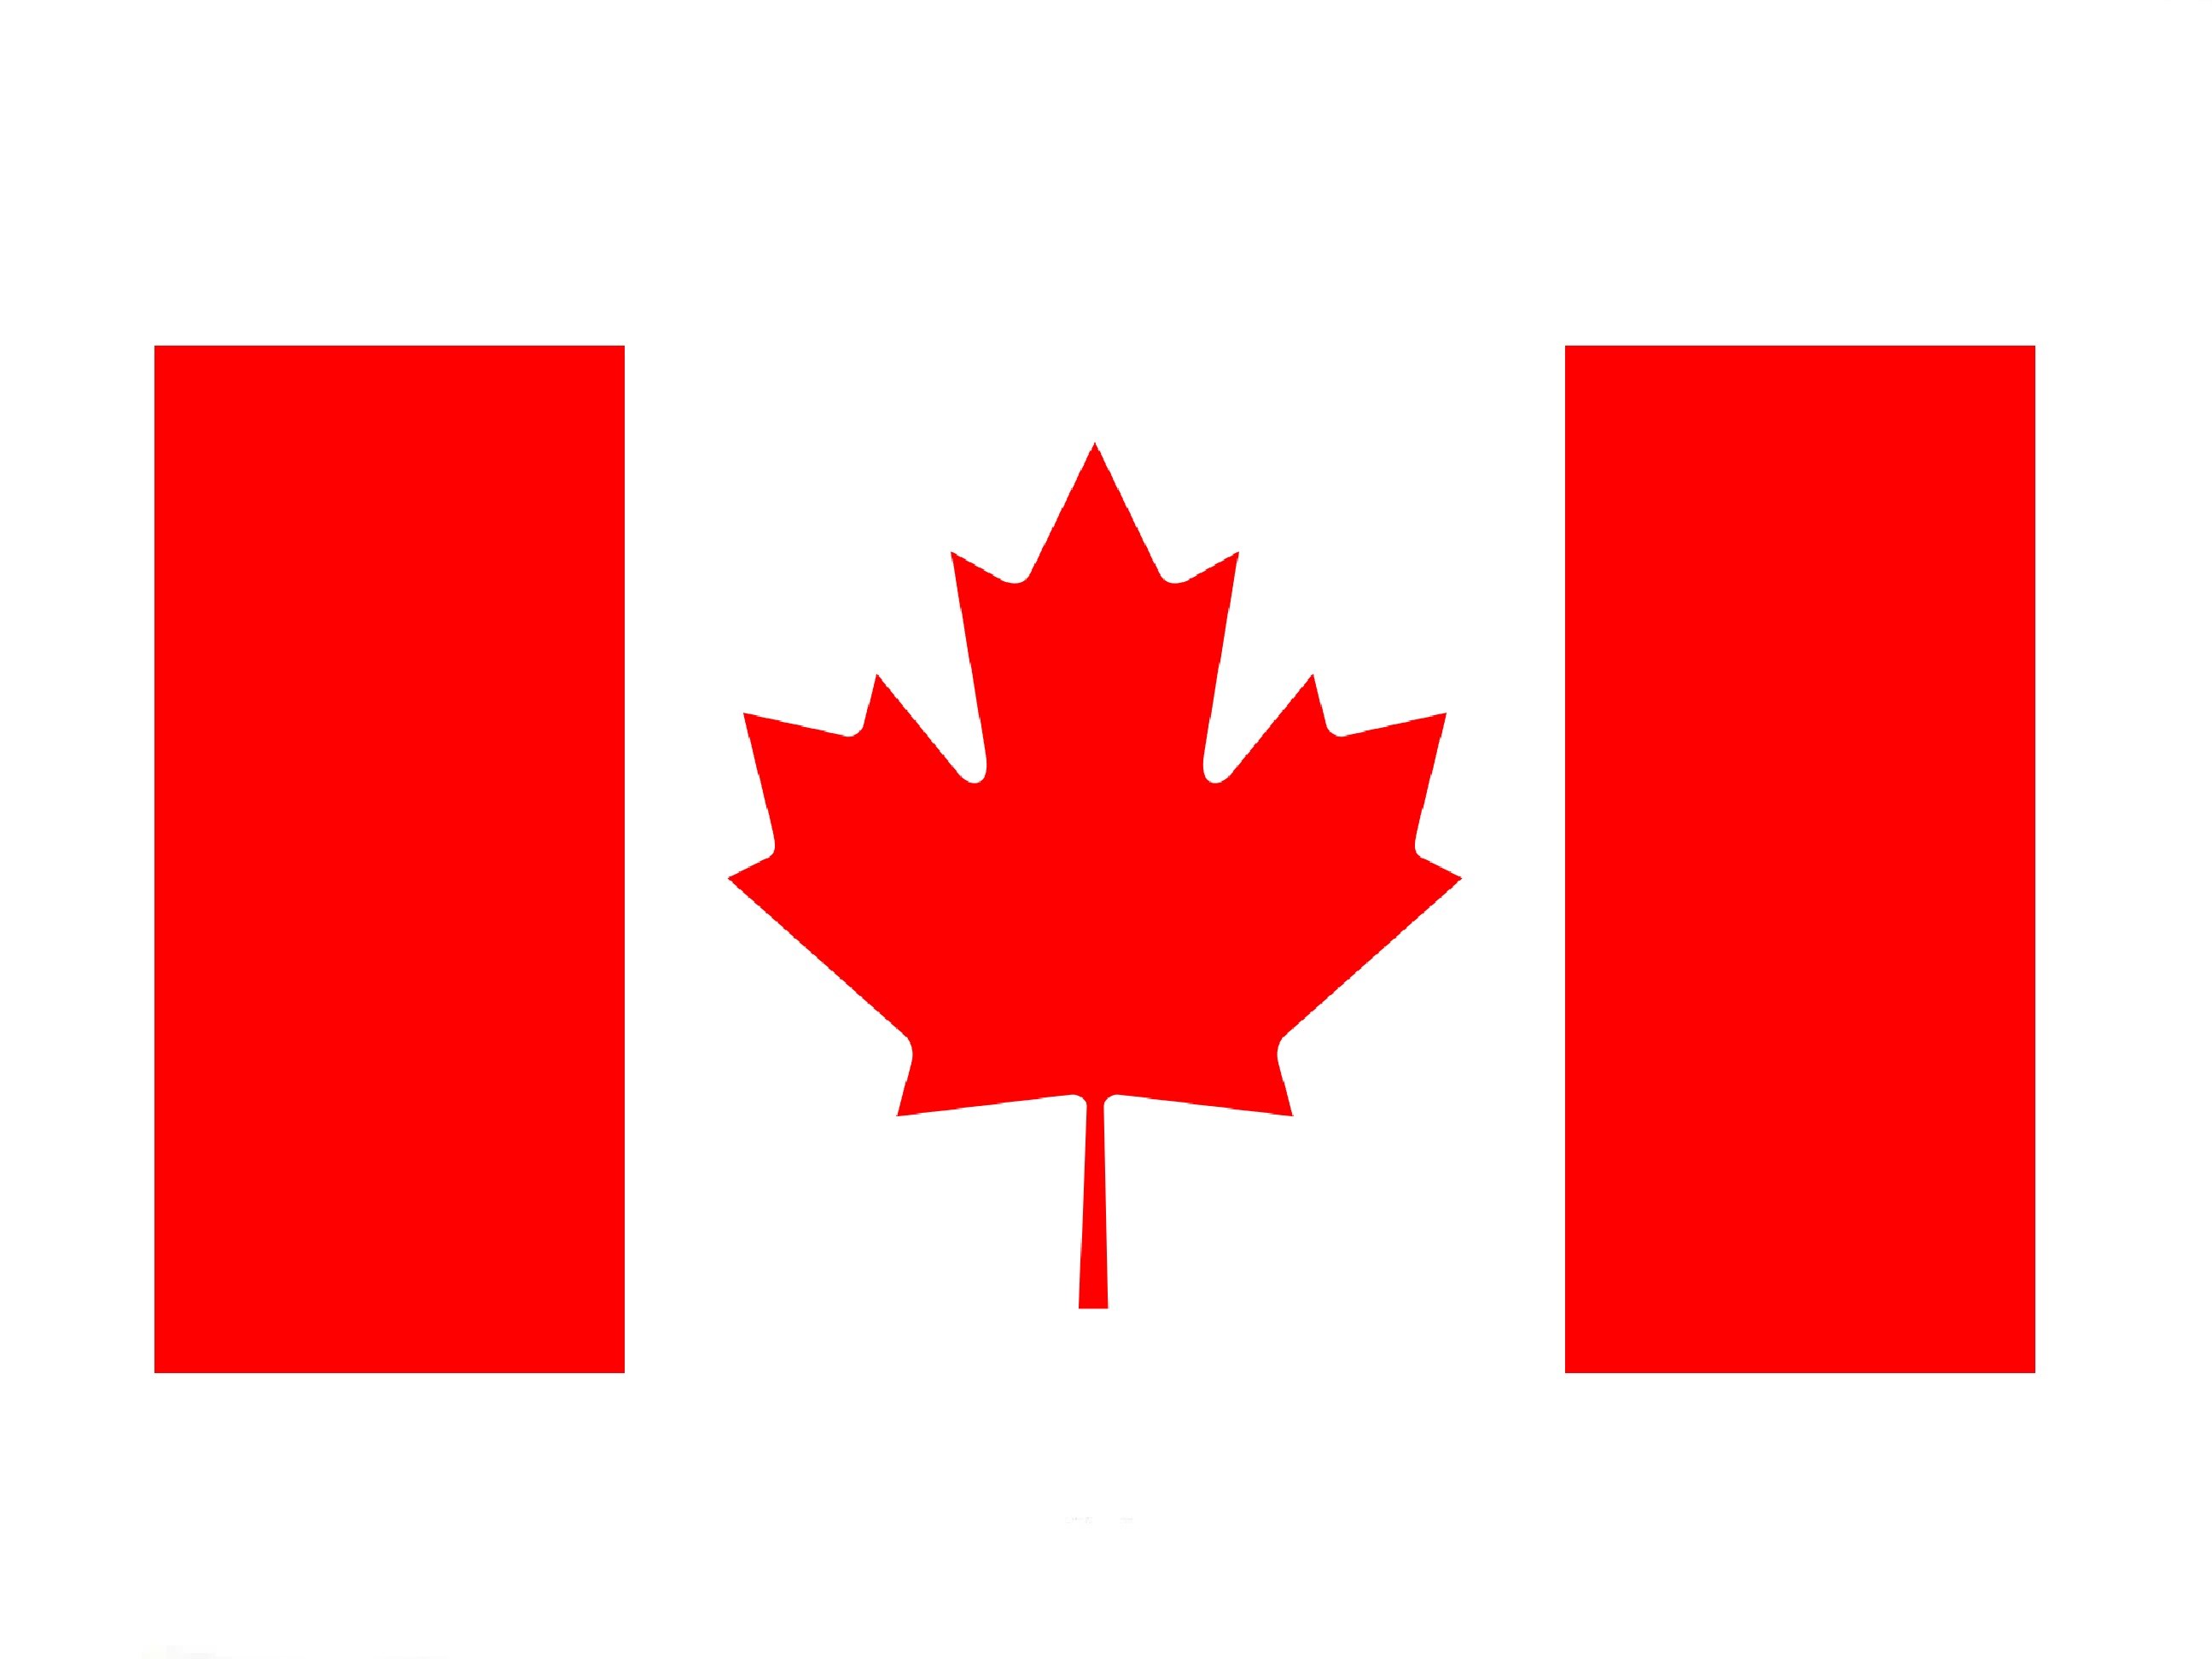 How To Draw A Canadian Flag D D Dº D D N D N D D D N N N D D D D D D D D N Youtube Clipart Best Clipart Best